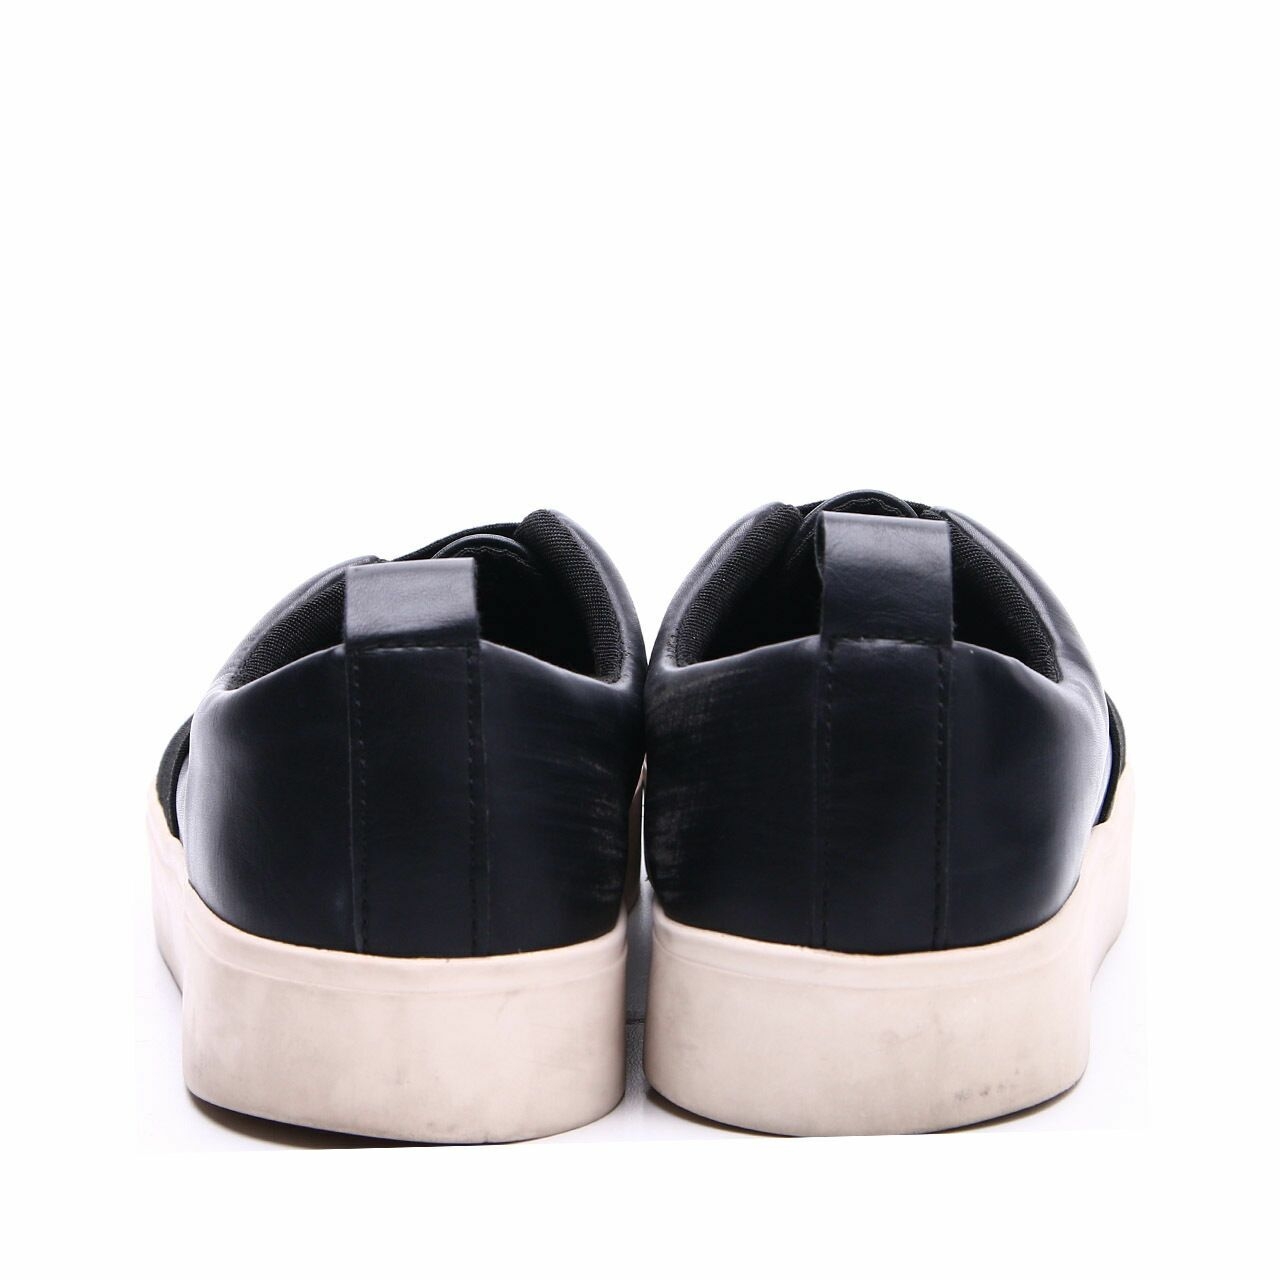 Stradivarius Black & White Leather Canvas Sneakers